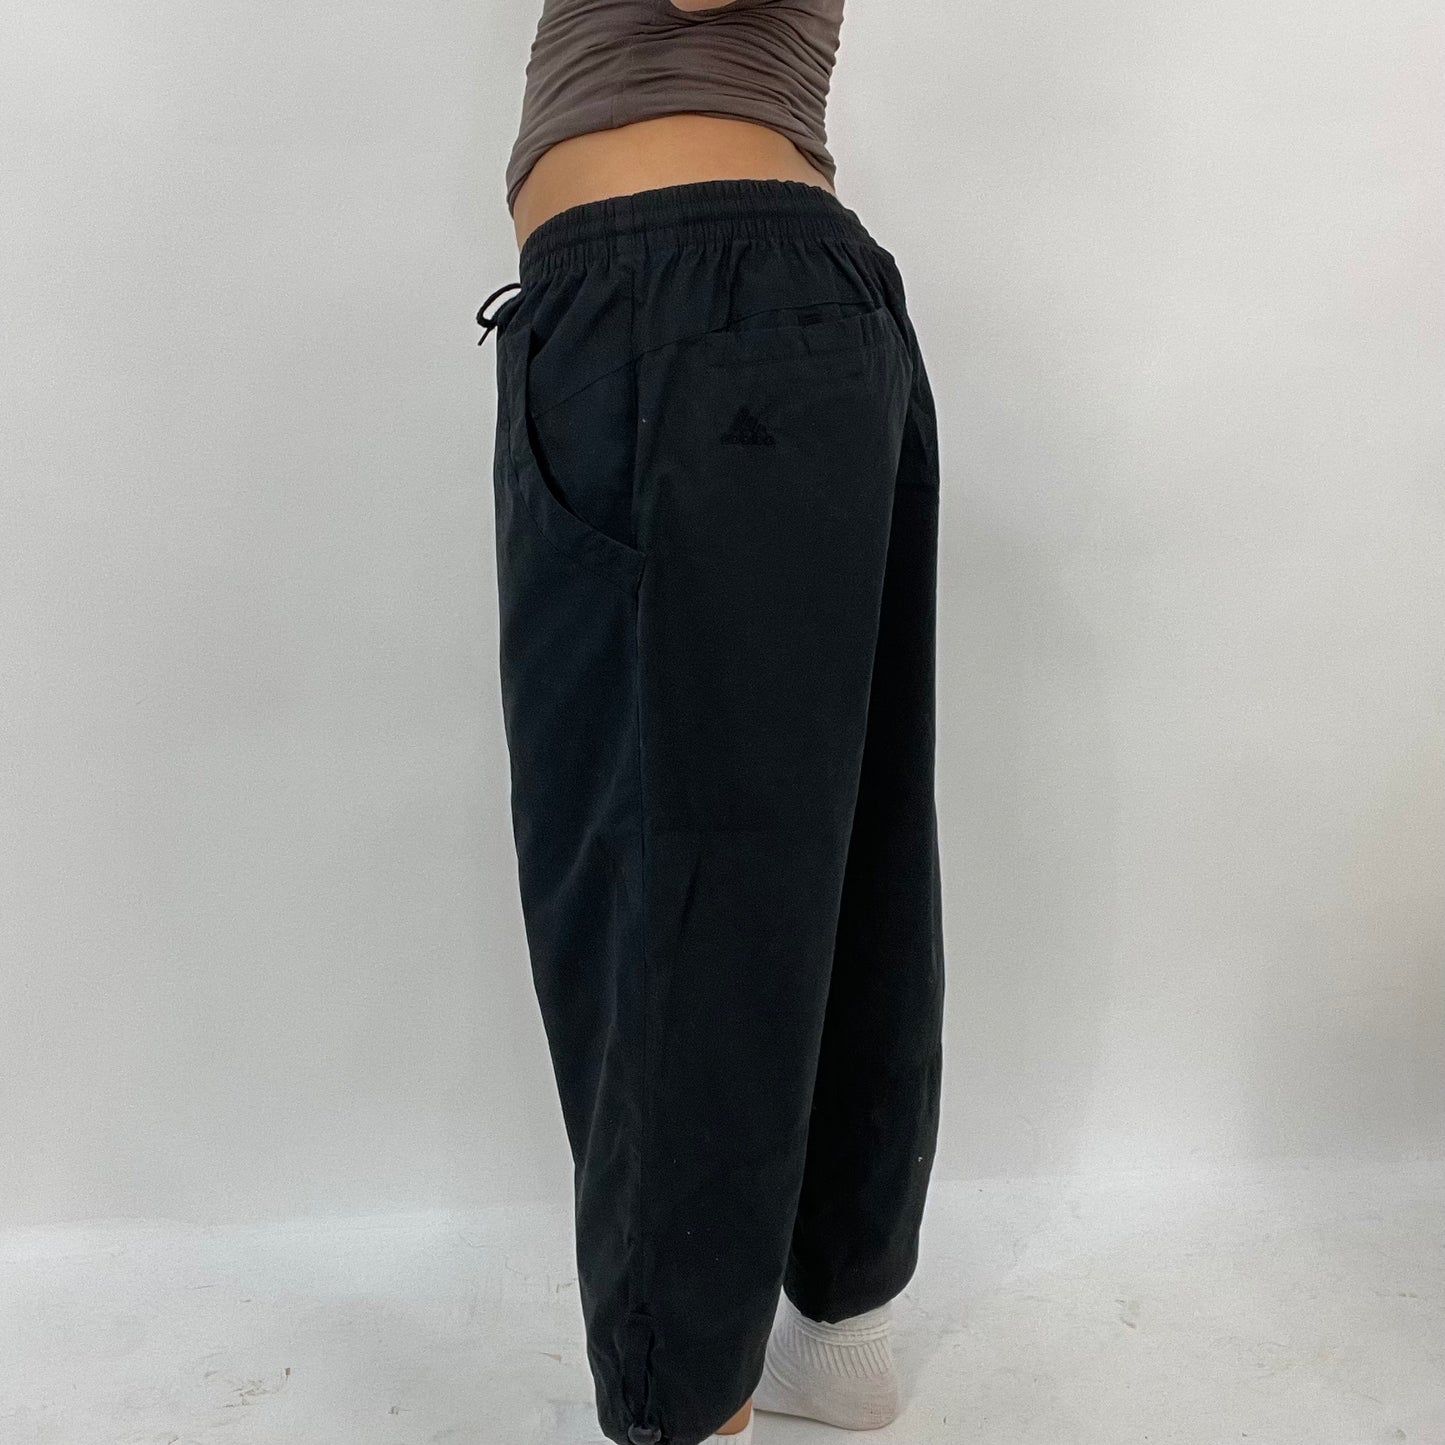 BLOKECORE DROP | black adidas 3/4 length trousers - m/l